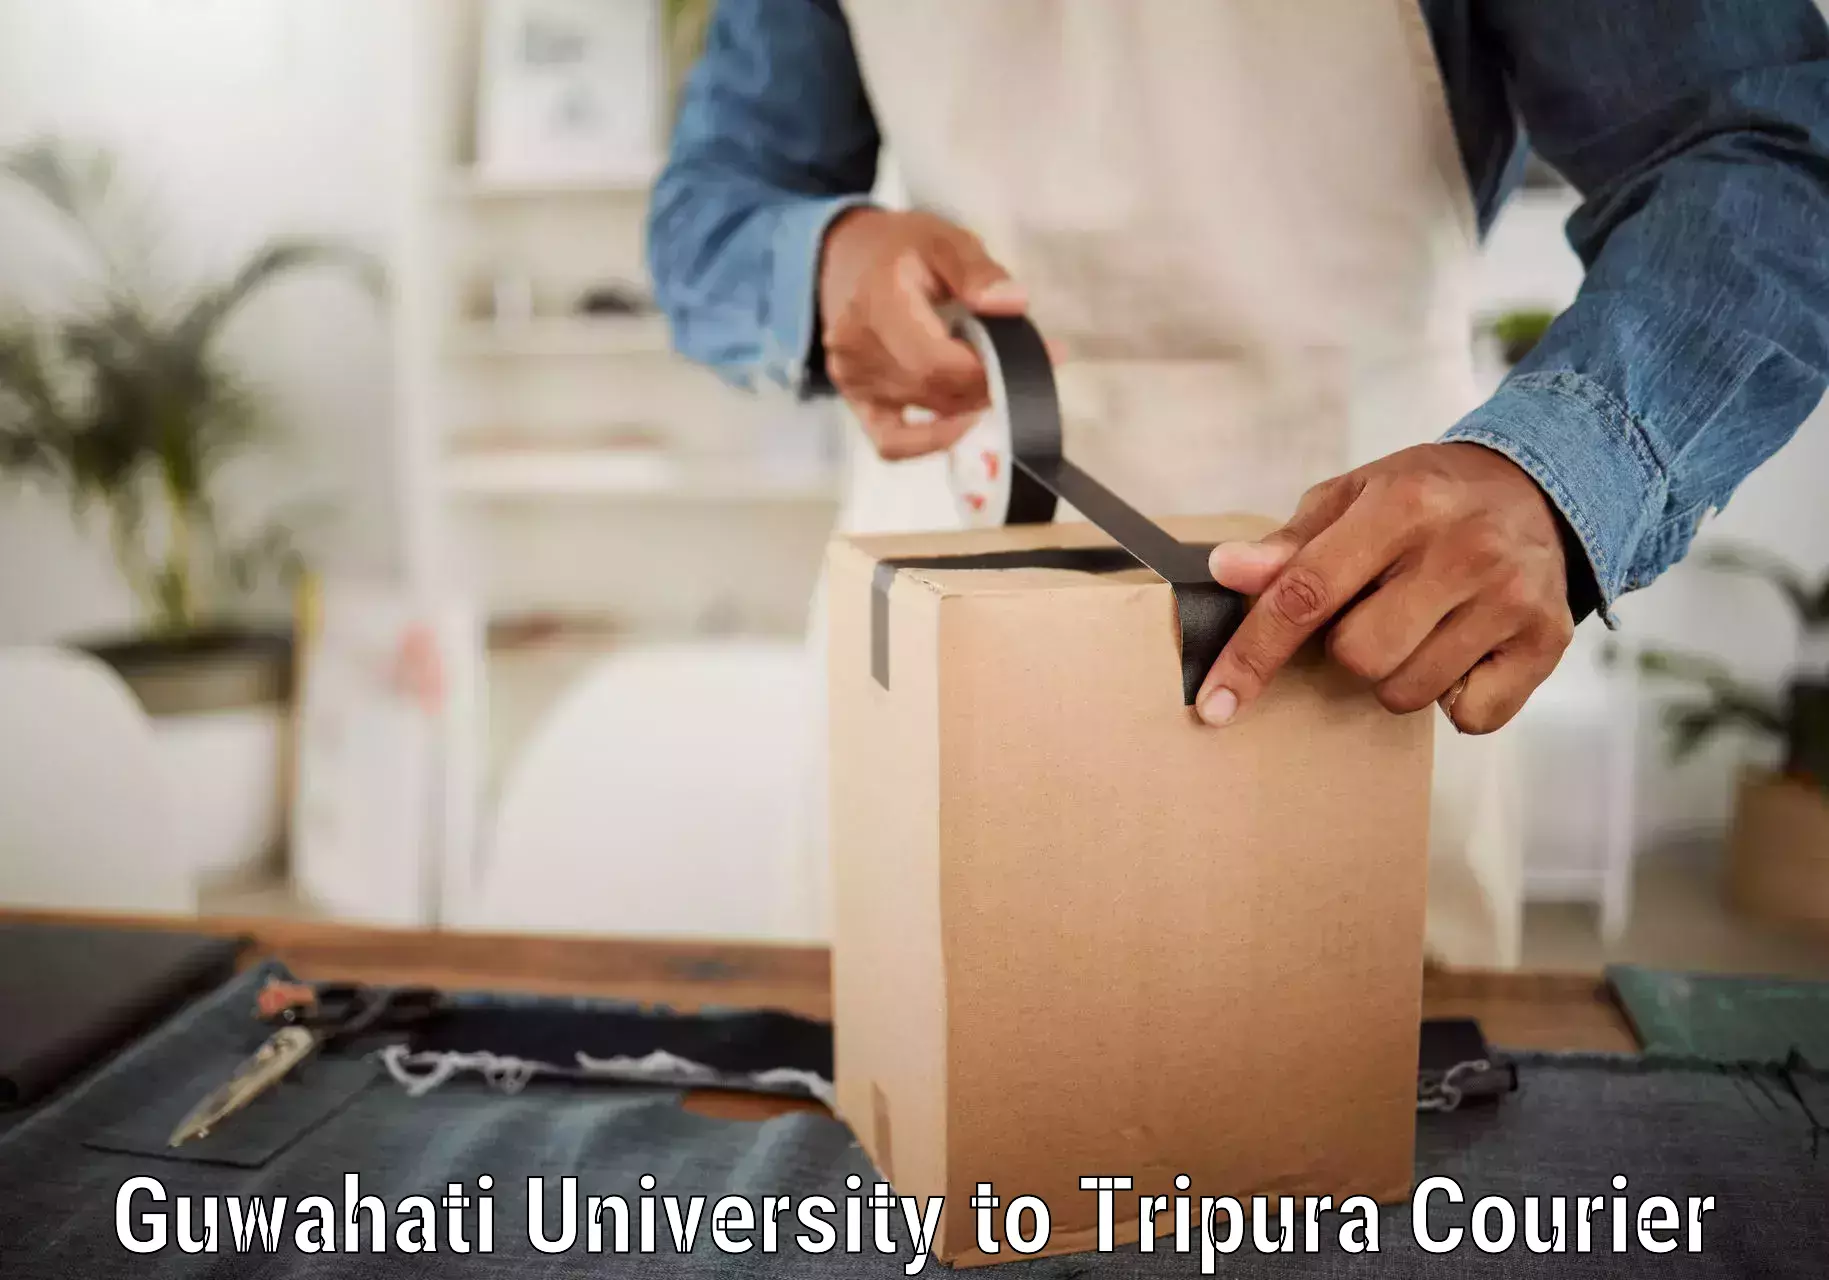 Professional courier handling Guwahati University to North Tripura